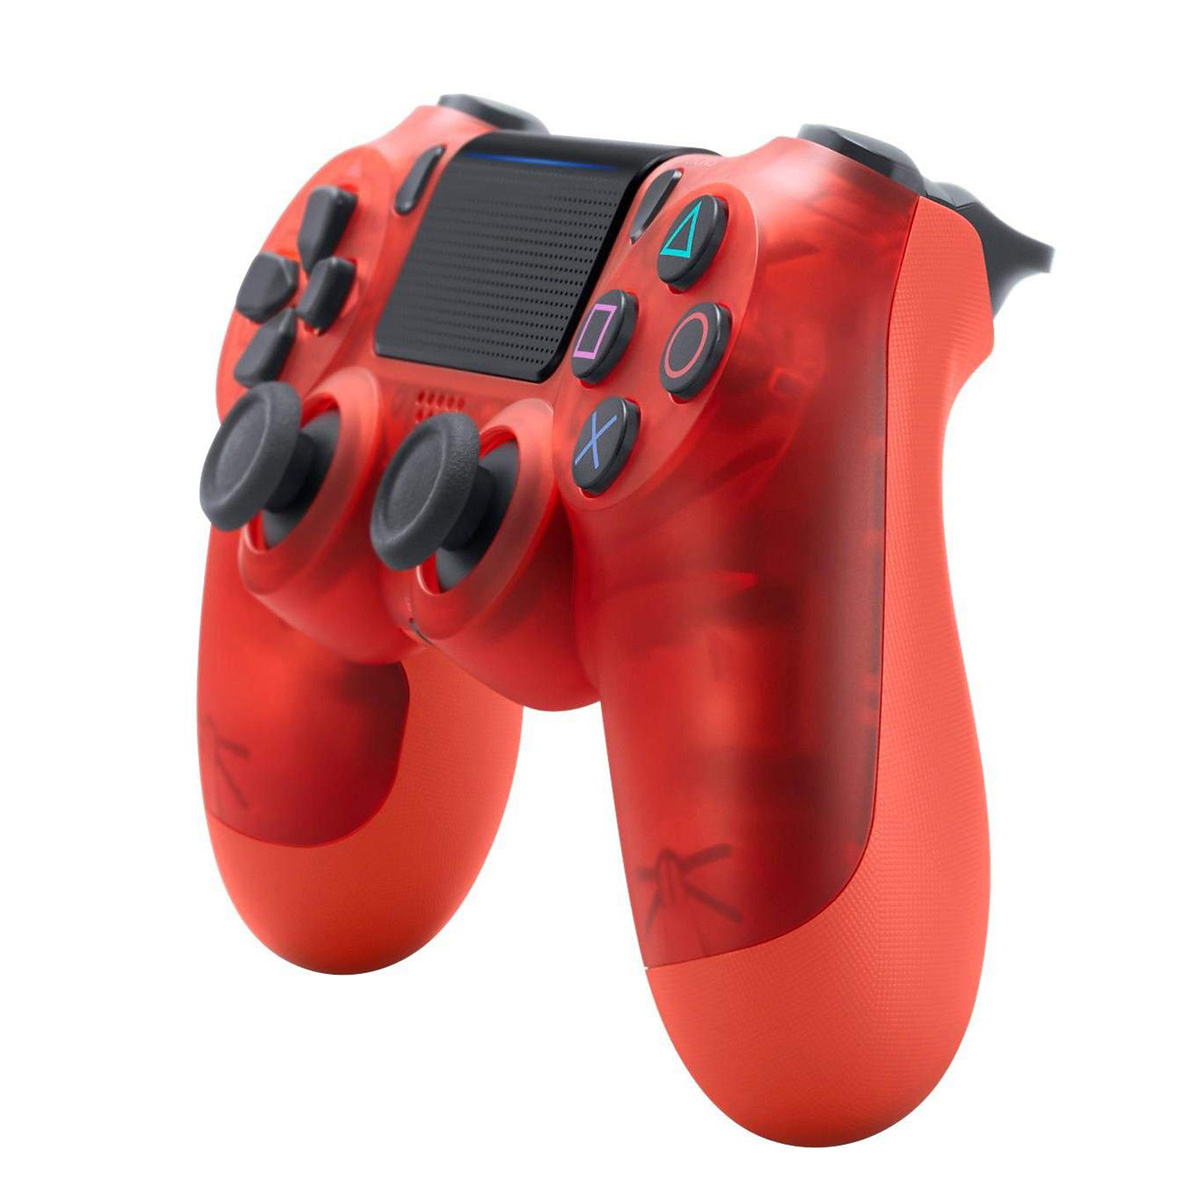 PS4 trådlös handkontroll, kristall röd